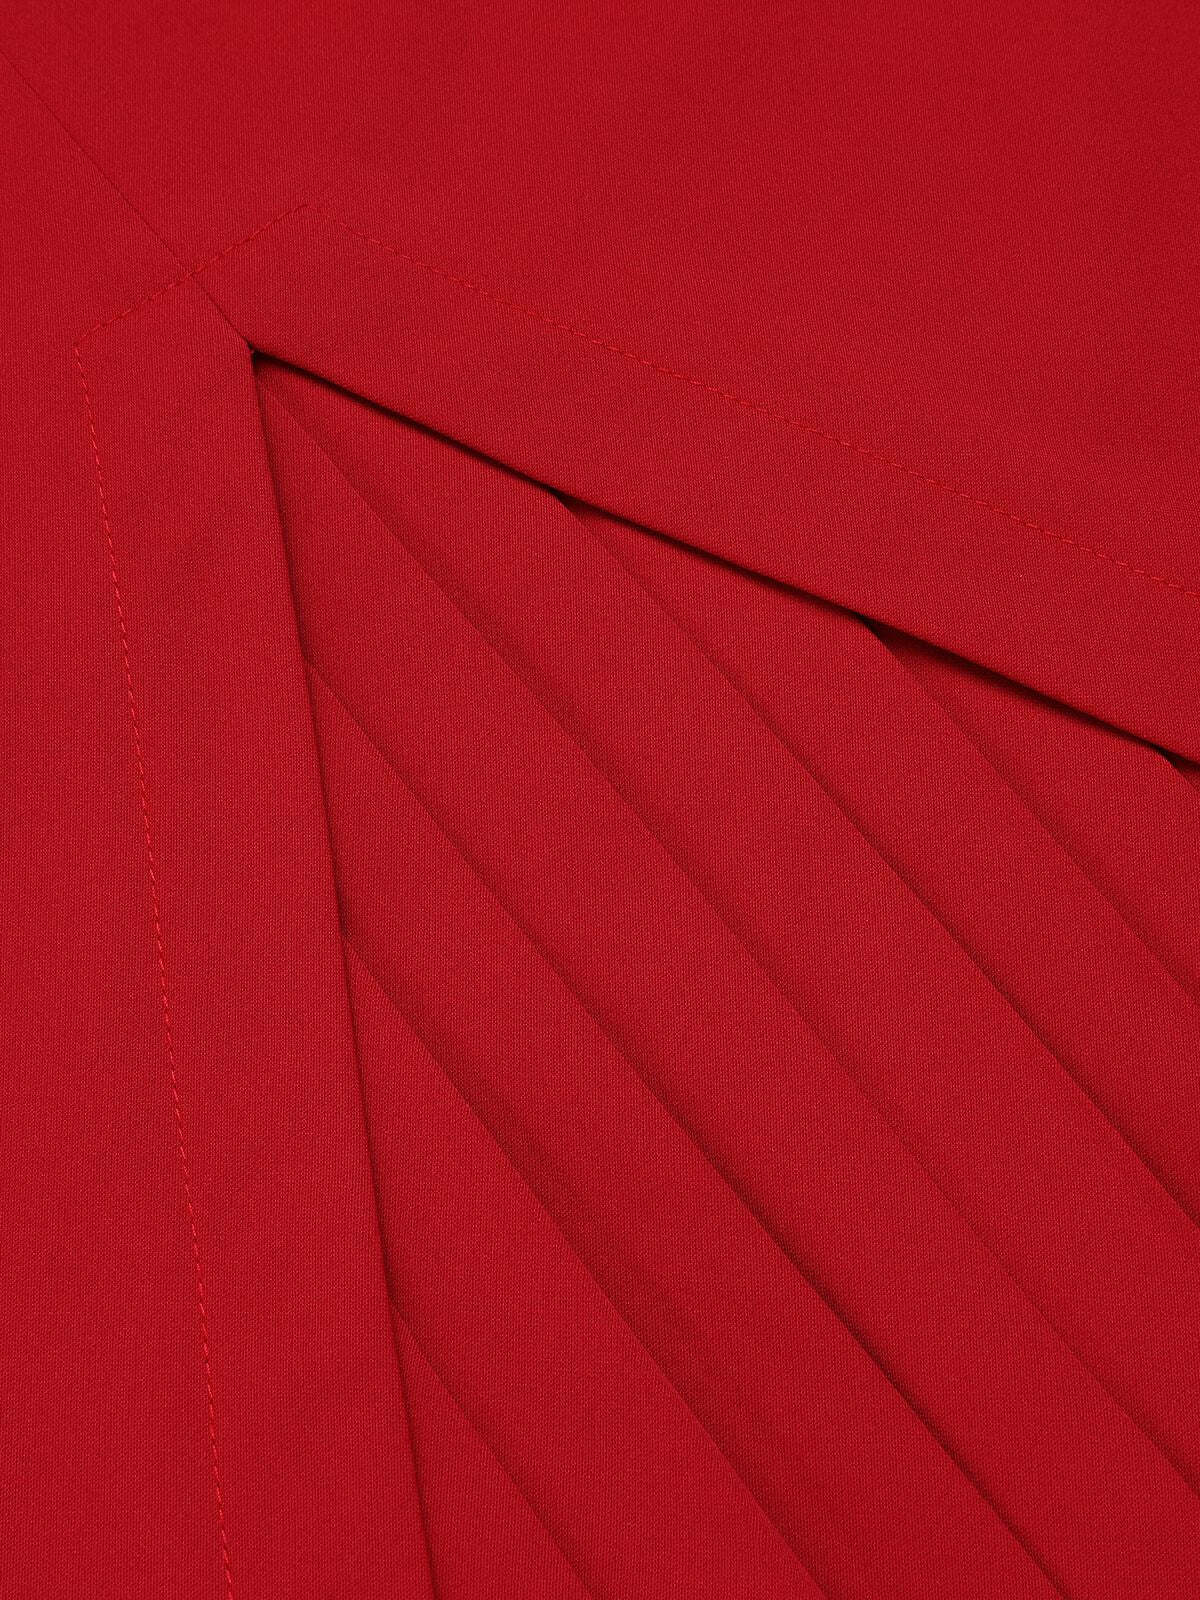 [Pre-sale] Red 1950s Stripes Patchwork Pencil Dress